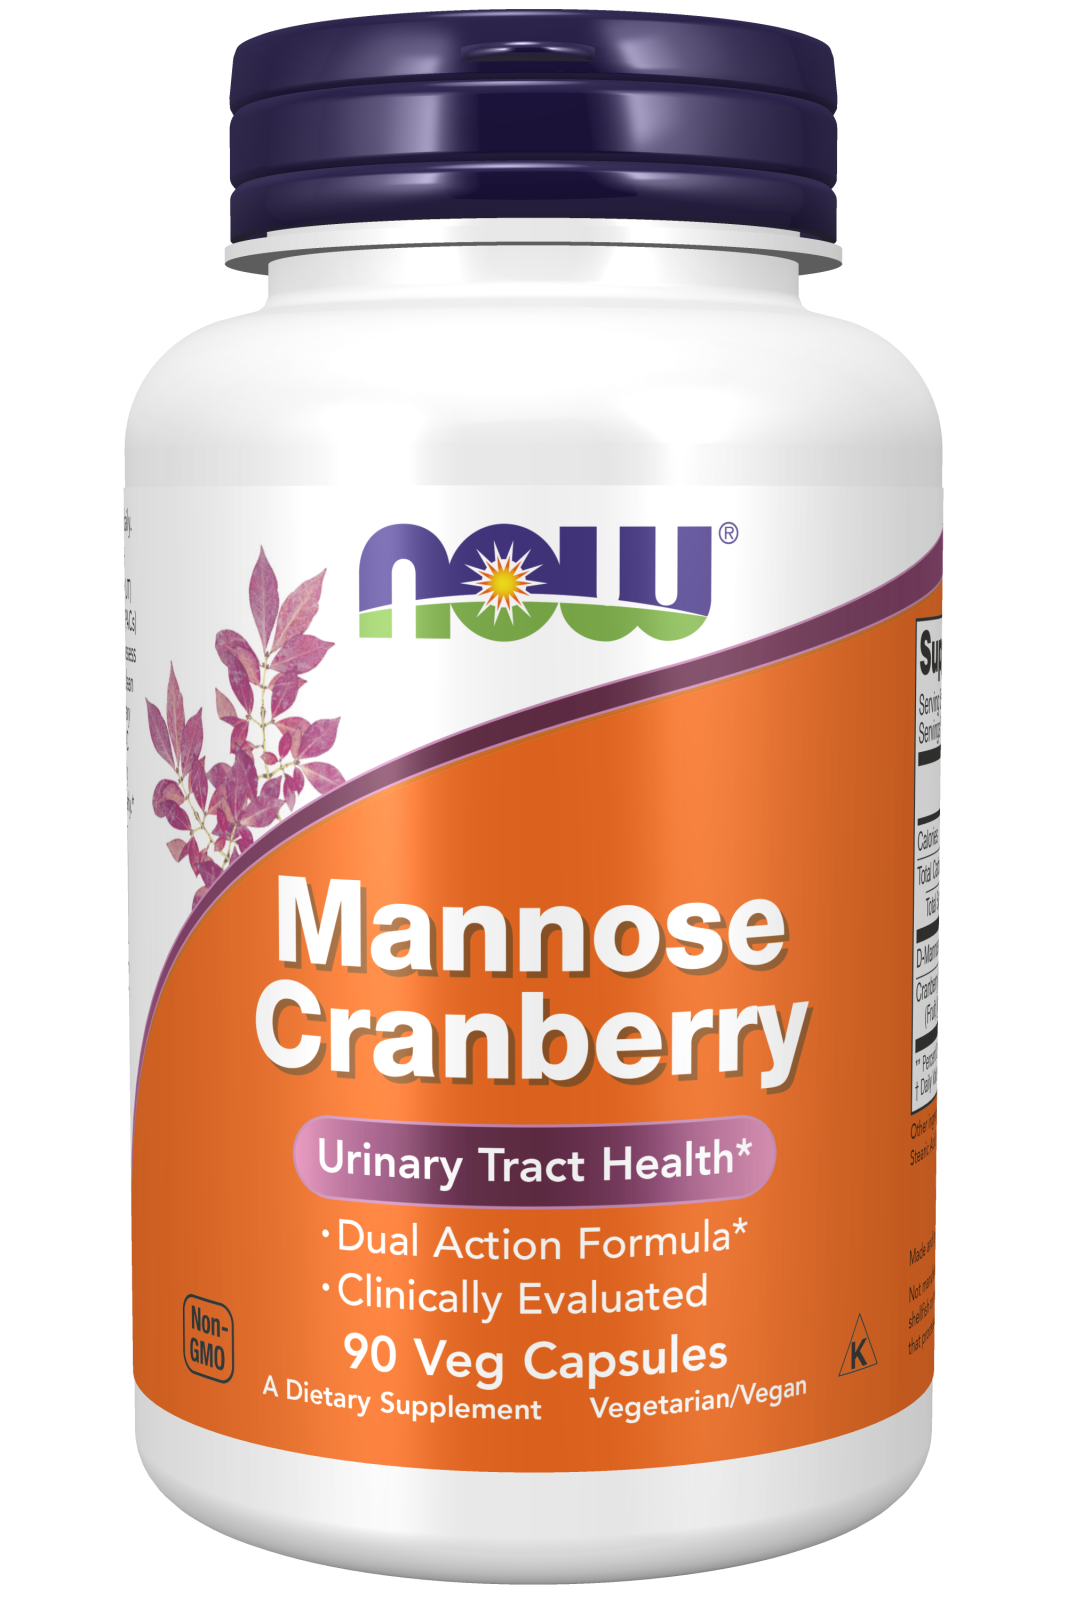 Mannose Cranberry - 90 Veg Capsules Bottle Front